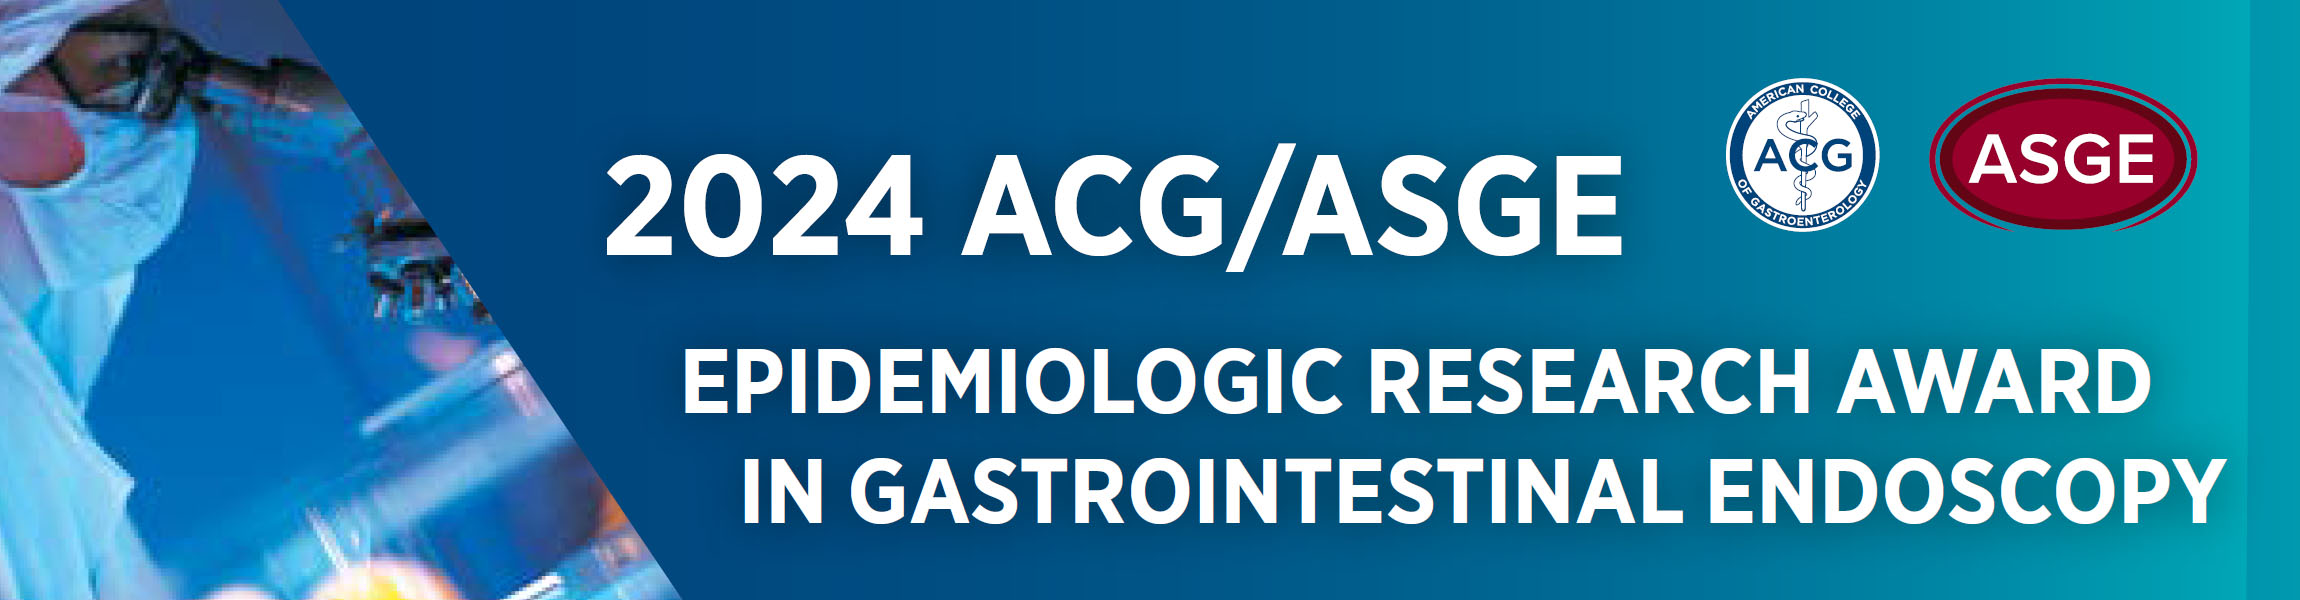 2024 ACG/ASGE. Epidemiological Research Award in Gastrointestinal Endoscopy. ACG. ASGE.